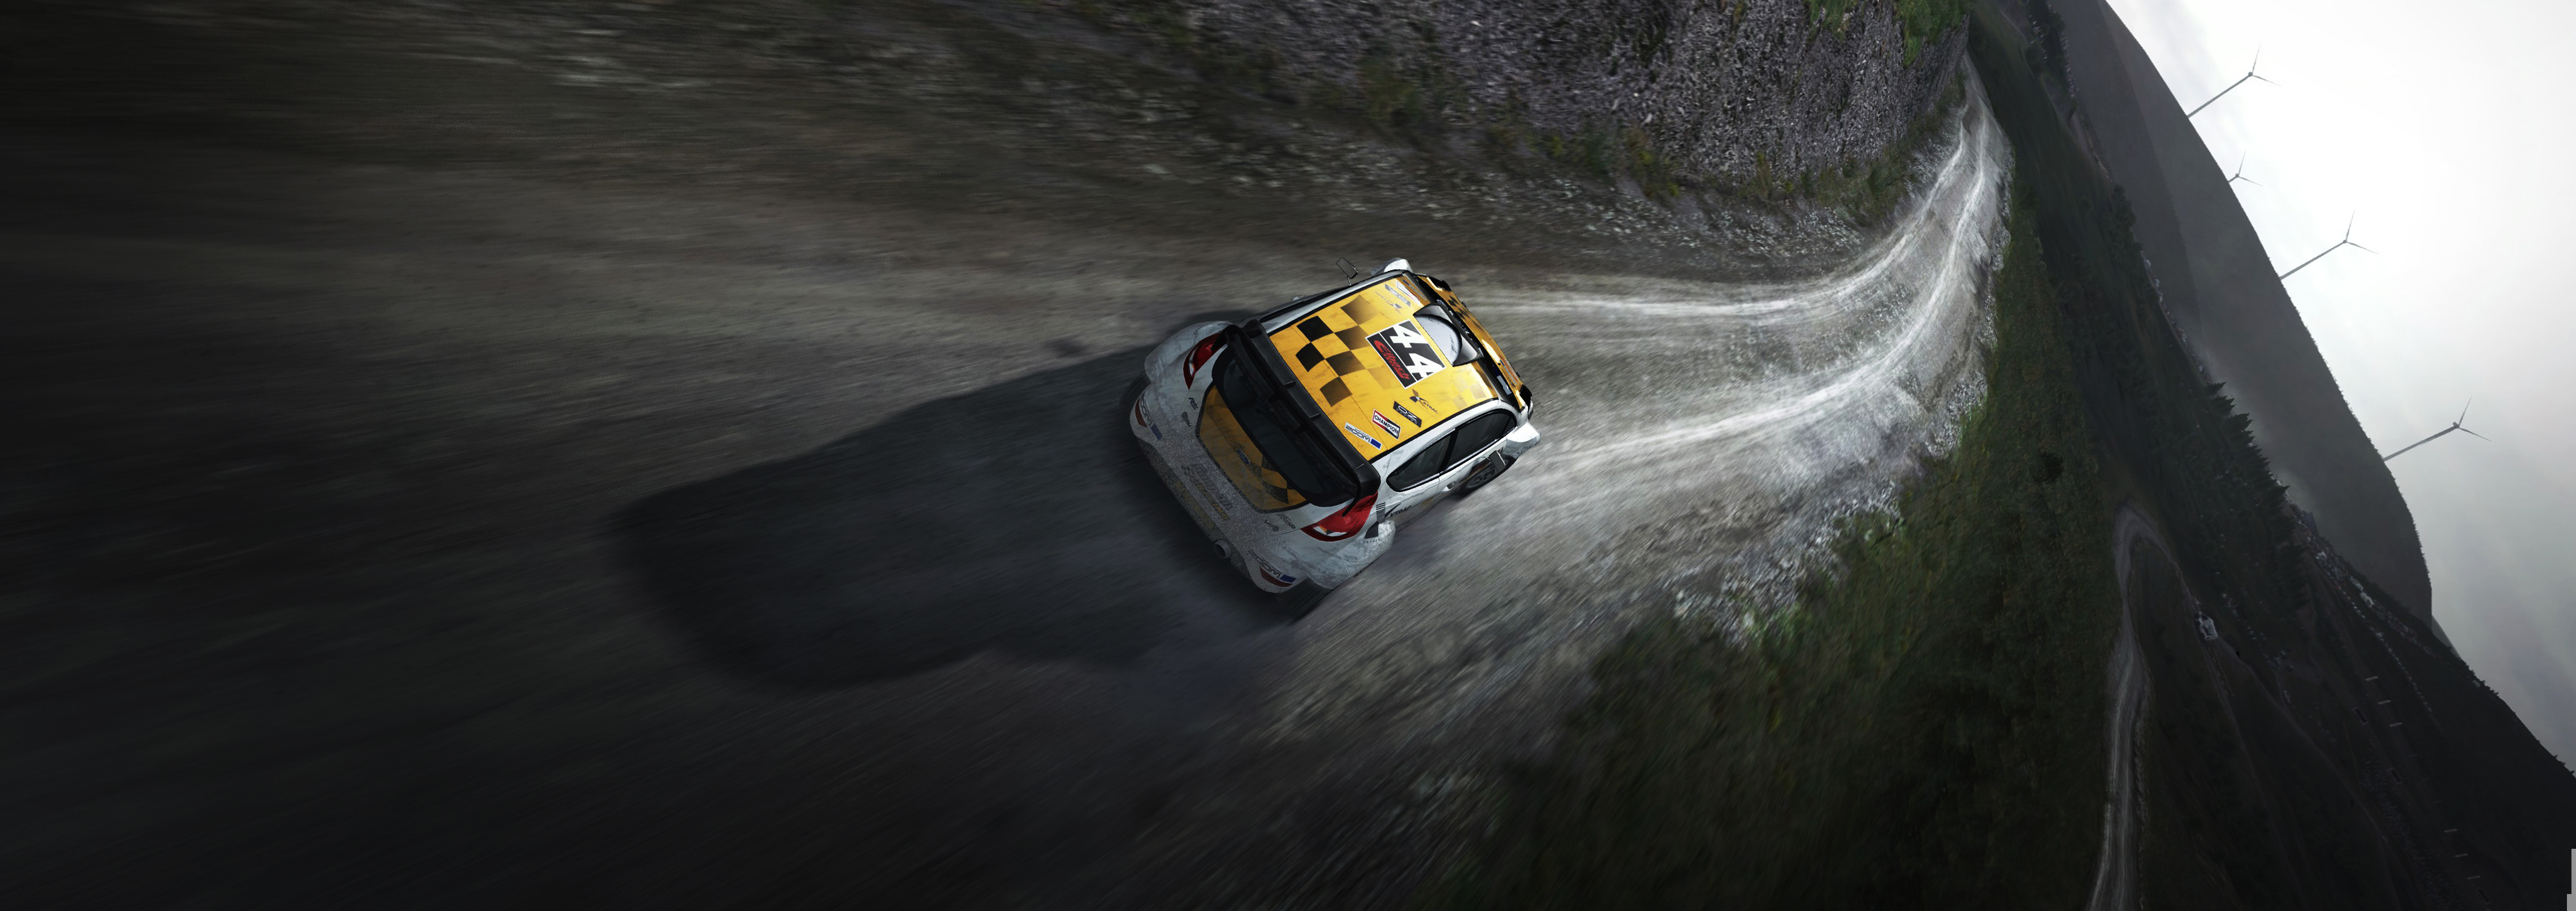 Dirt Rally 4557x1611